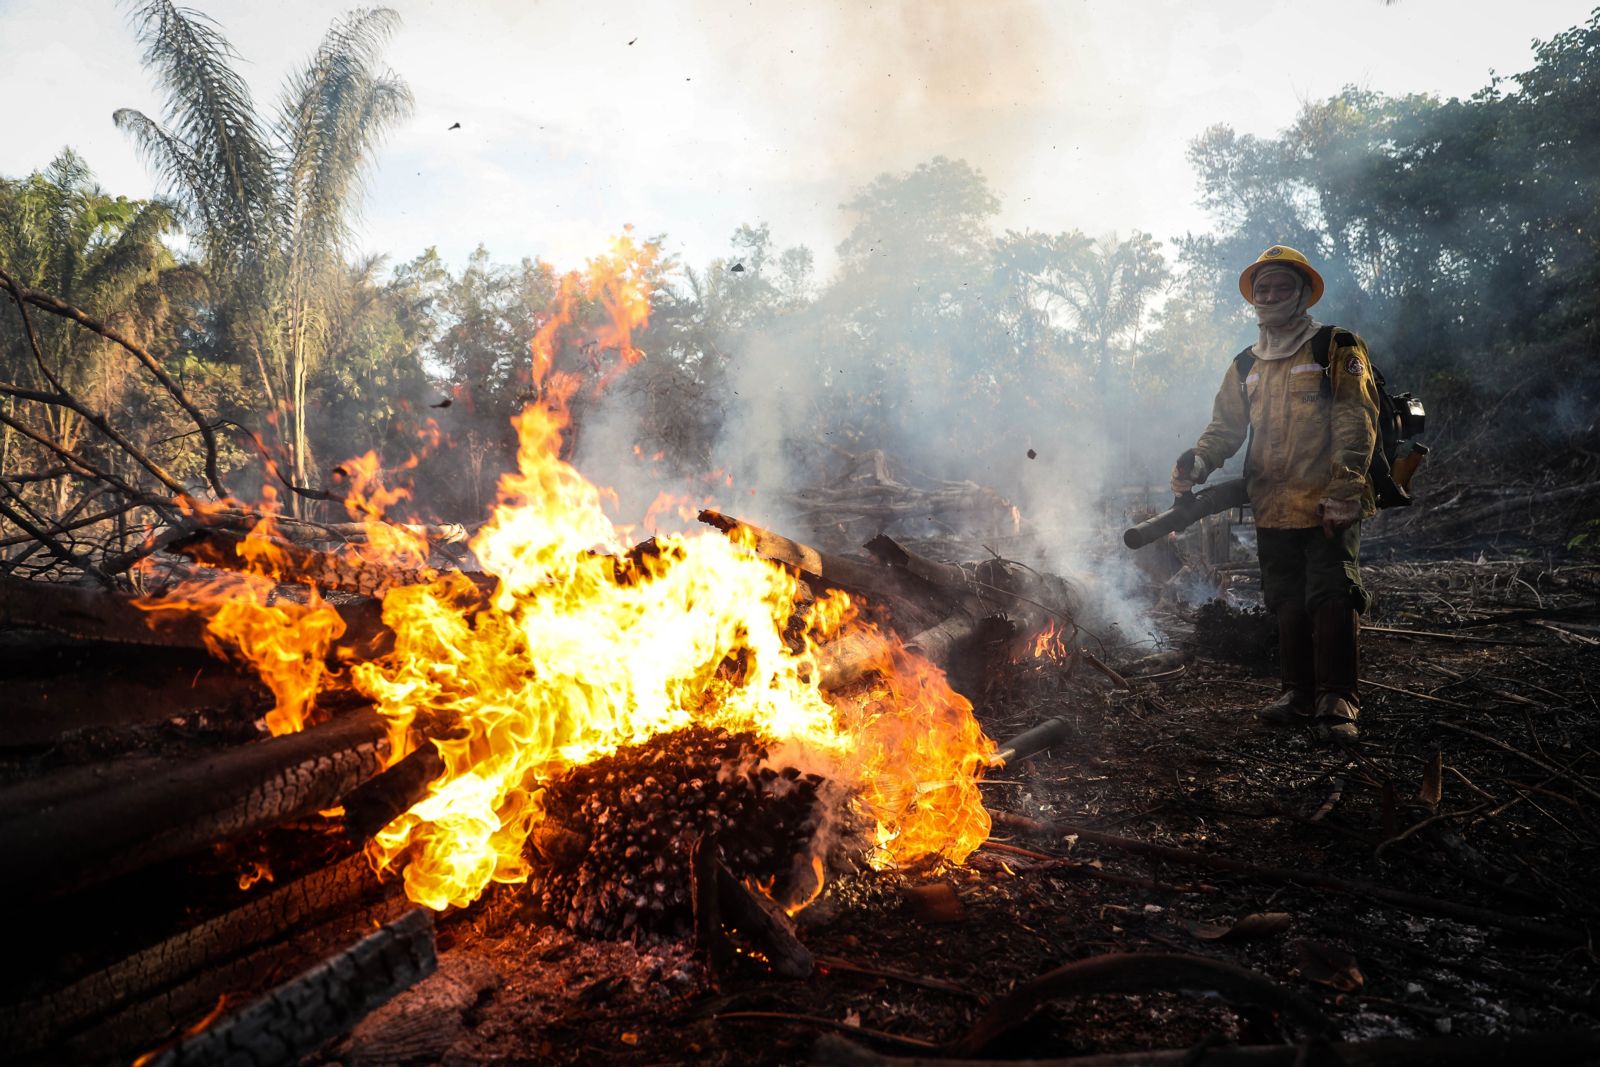 Will climate change litigation save the Brazilian Amazon?